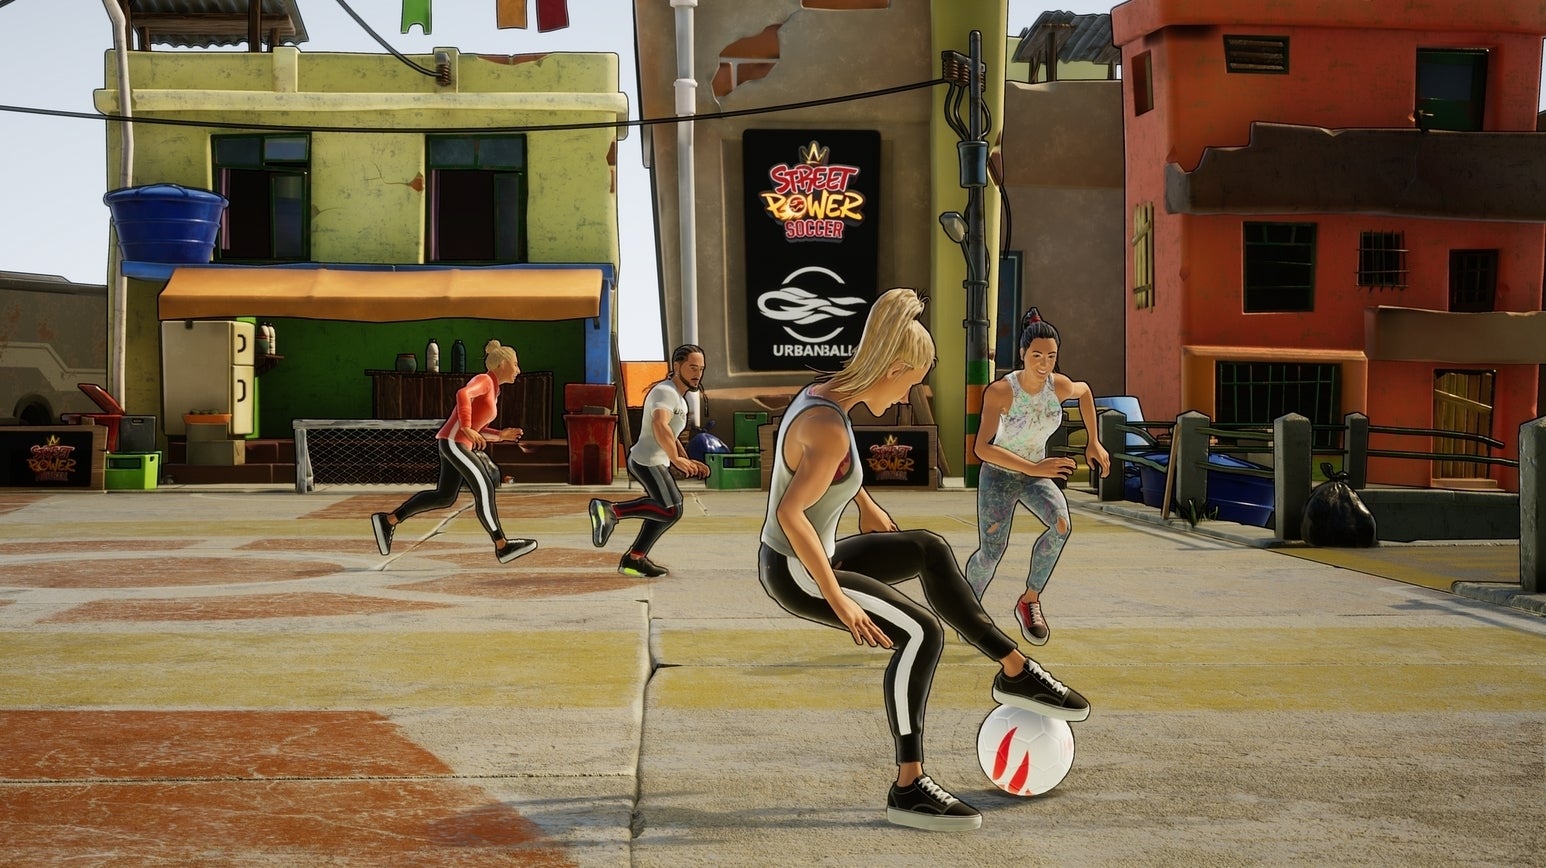 Bilder zu Street Power Football lässt euch im Sommer virtuellen Straßenfußball spielen